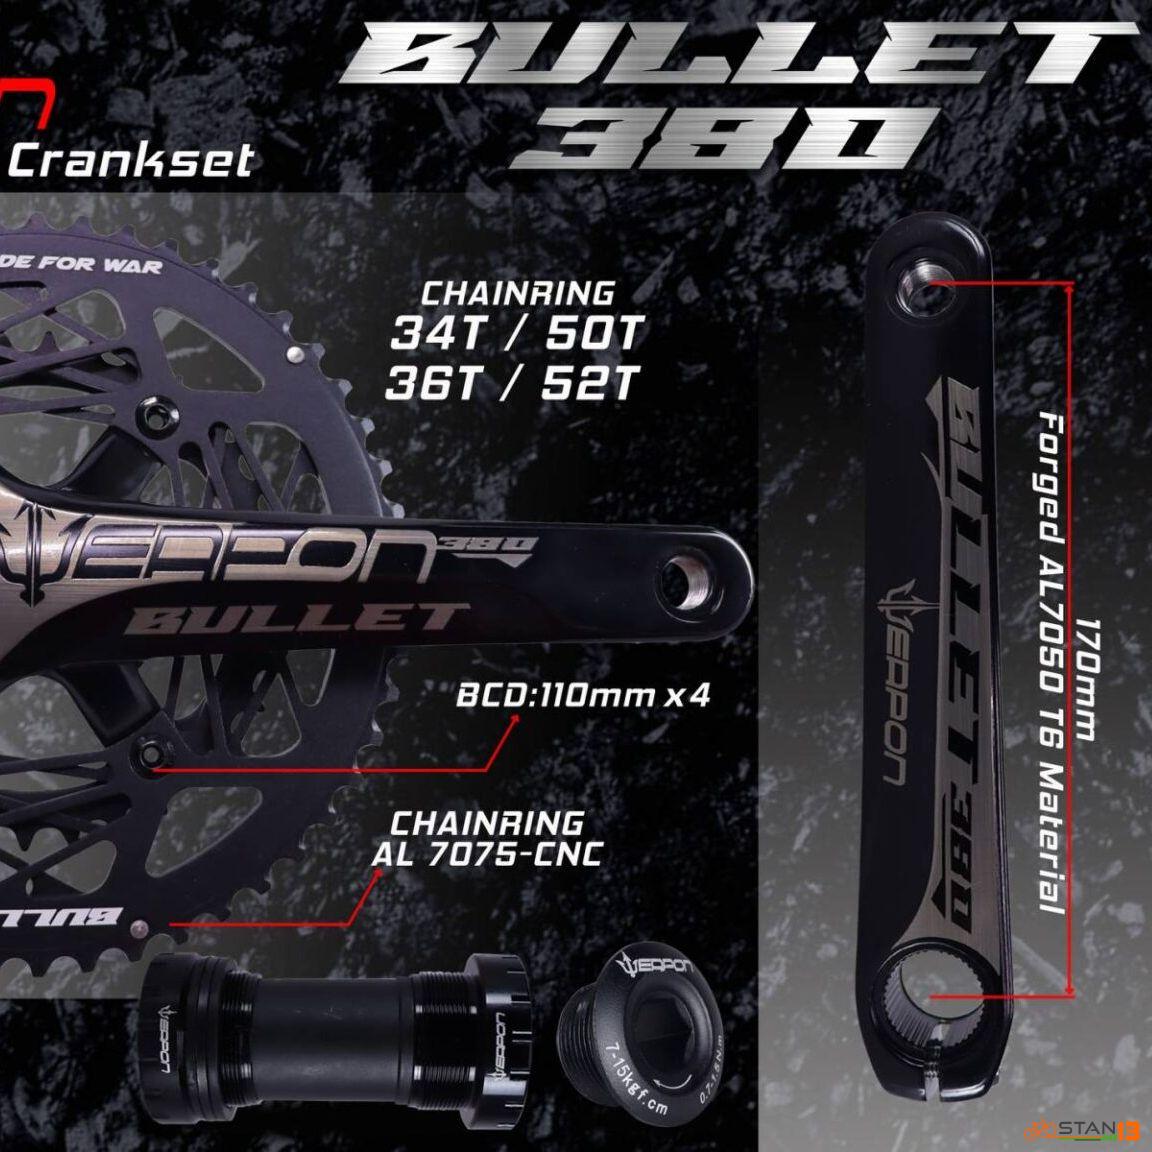 Crank Weapon Bullet 380 Alloy Road Bike Crank Set with BB